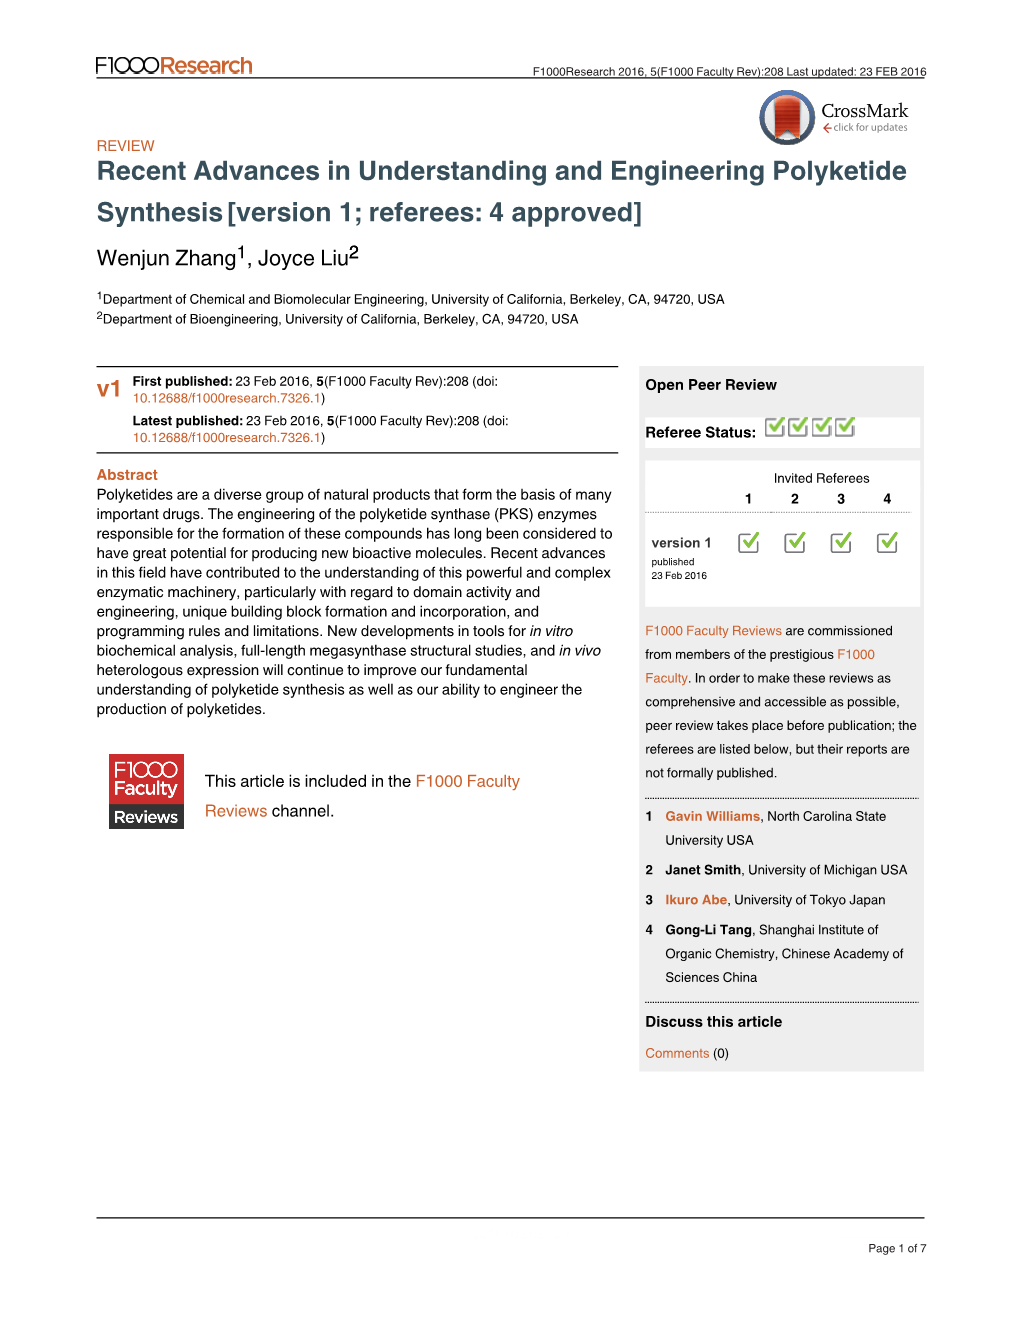 Recent Advances in Understanding and Engineering Polyketide